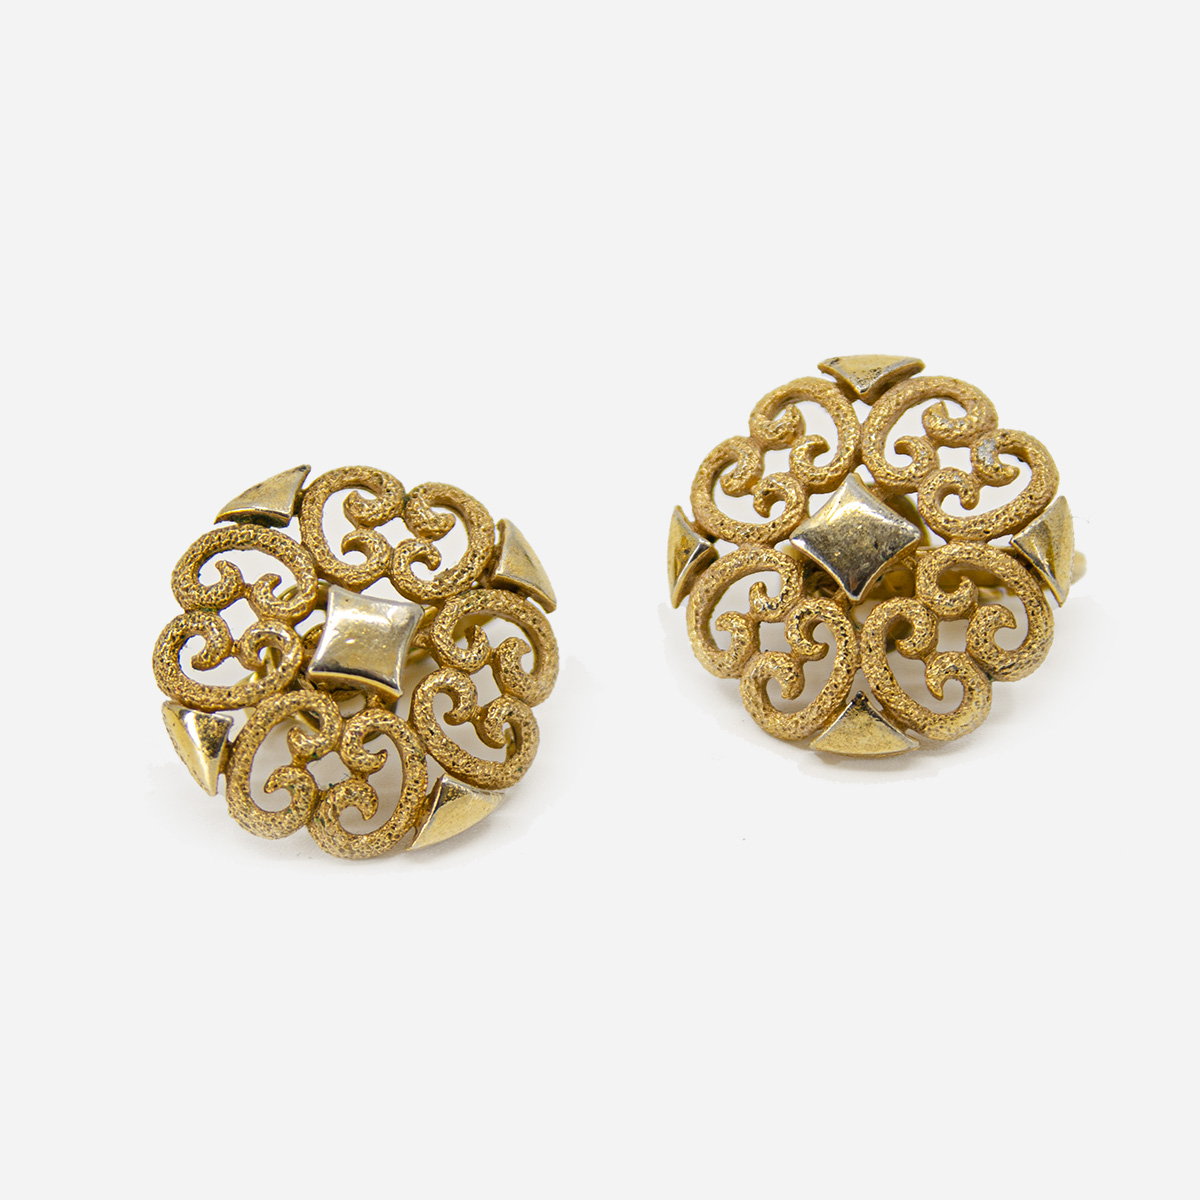 gold avon button earrings